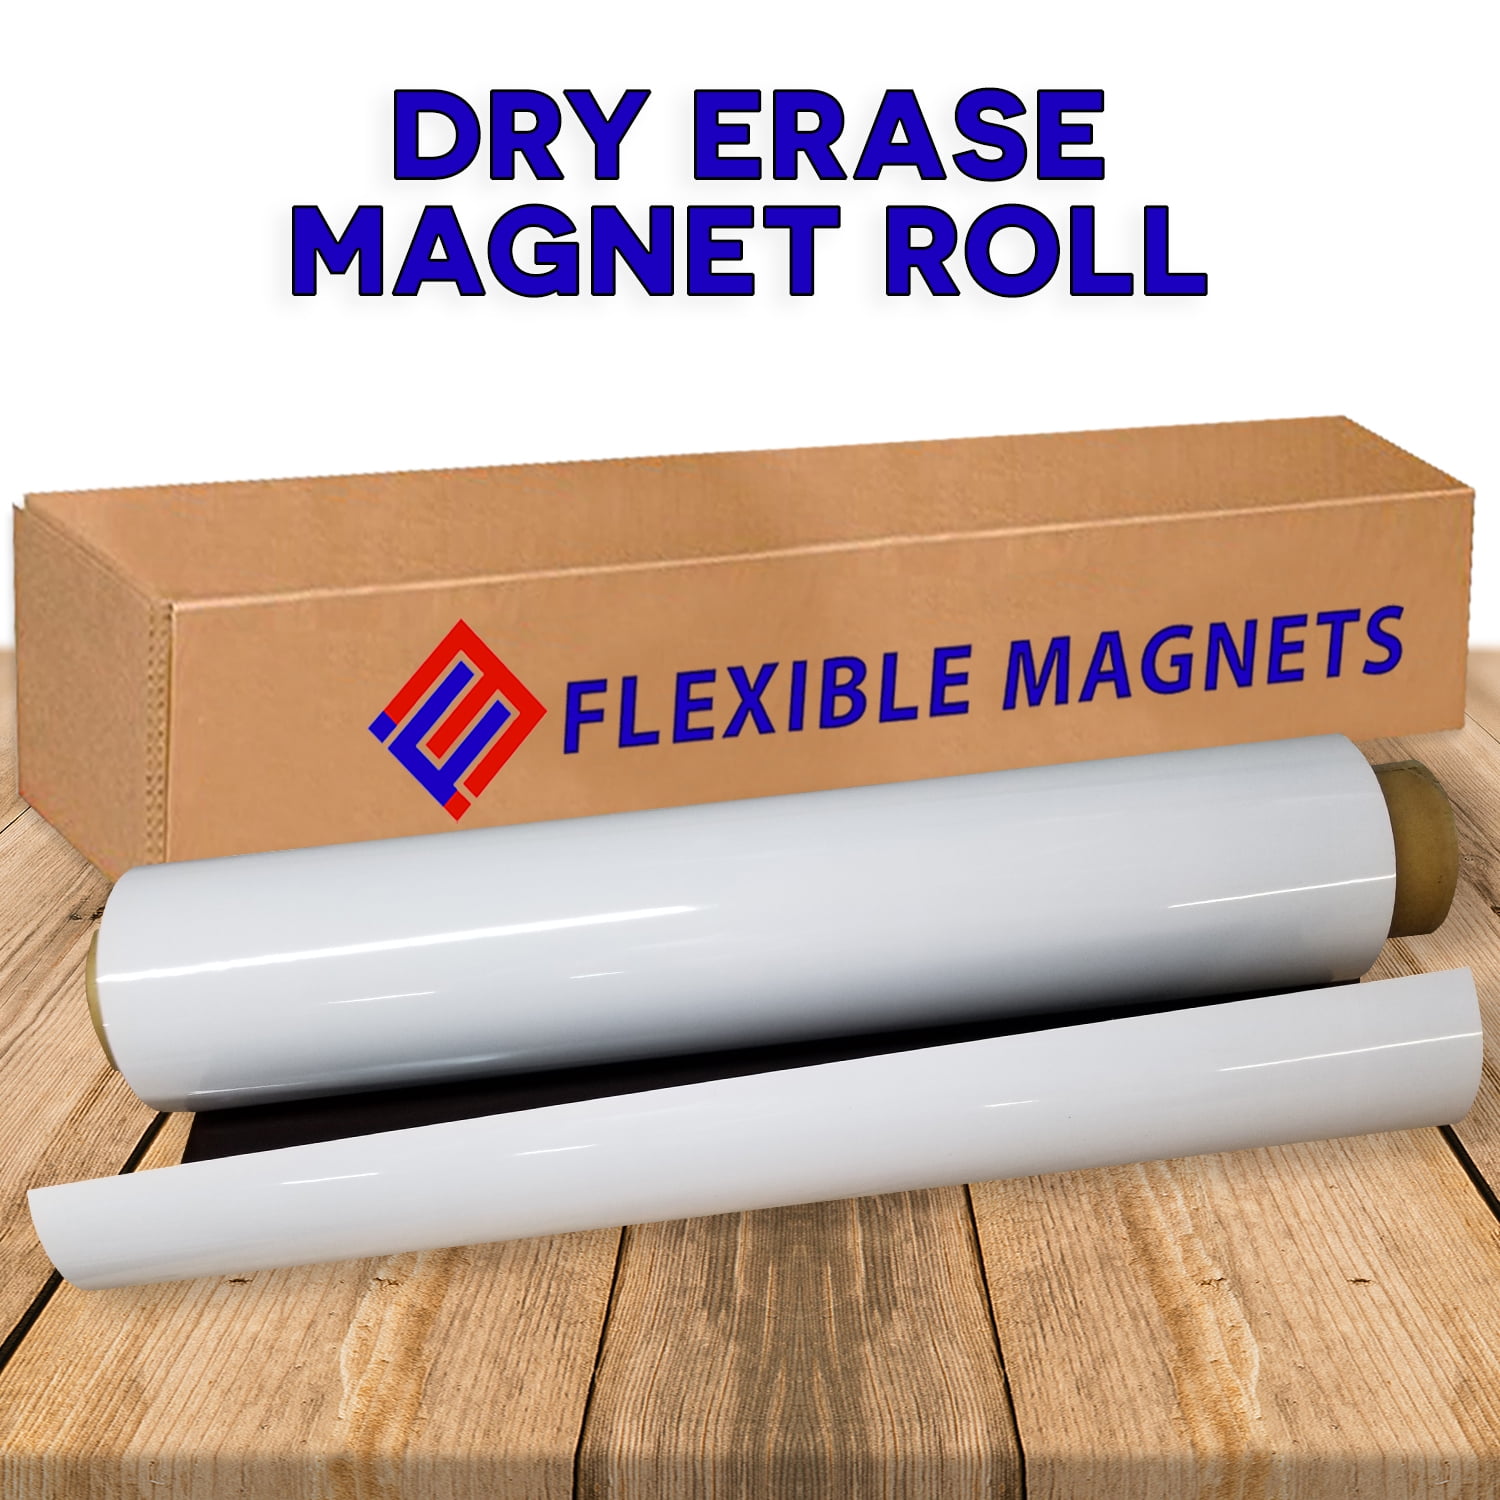 Magnetic Strip Tape 25Ft Flexible Roll Rewritable Dry Erase Magnet Super Strong 